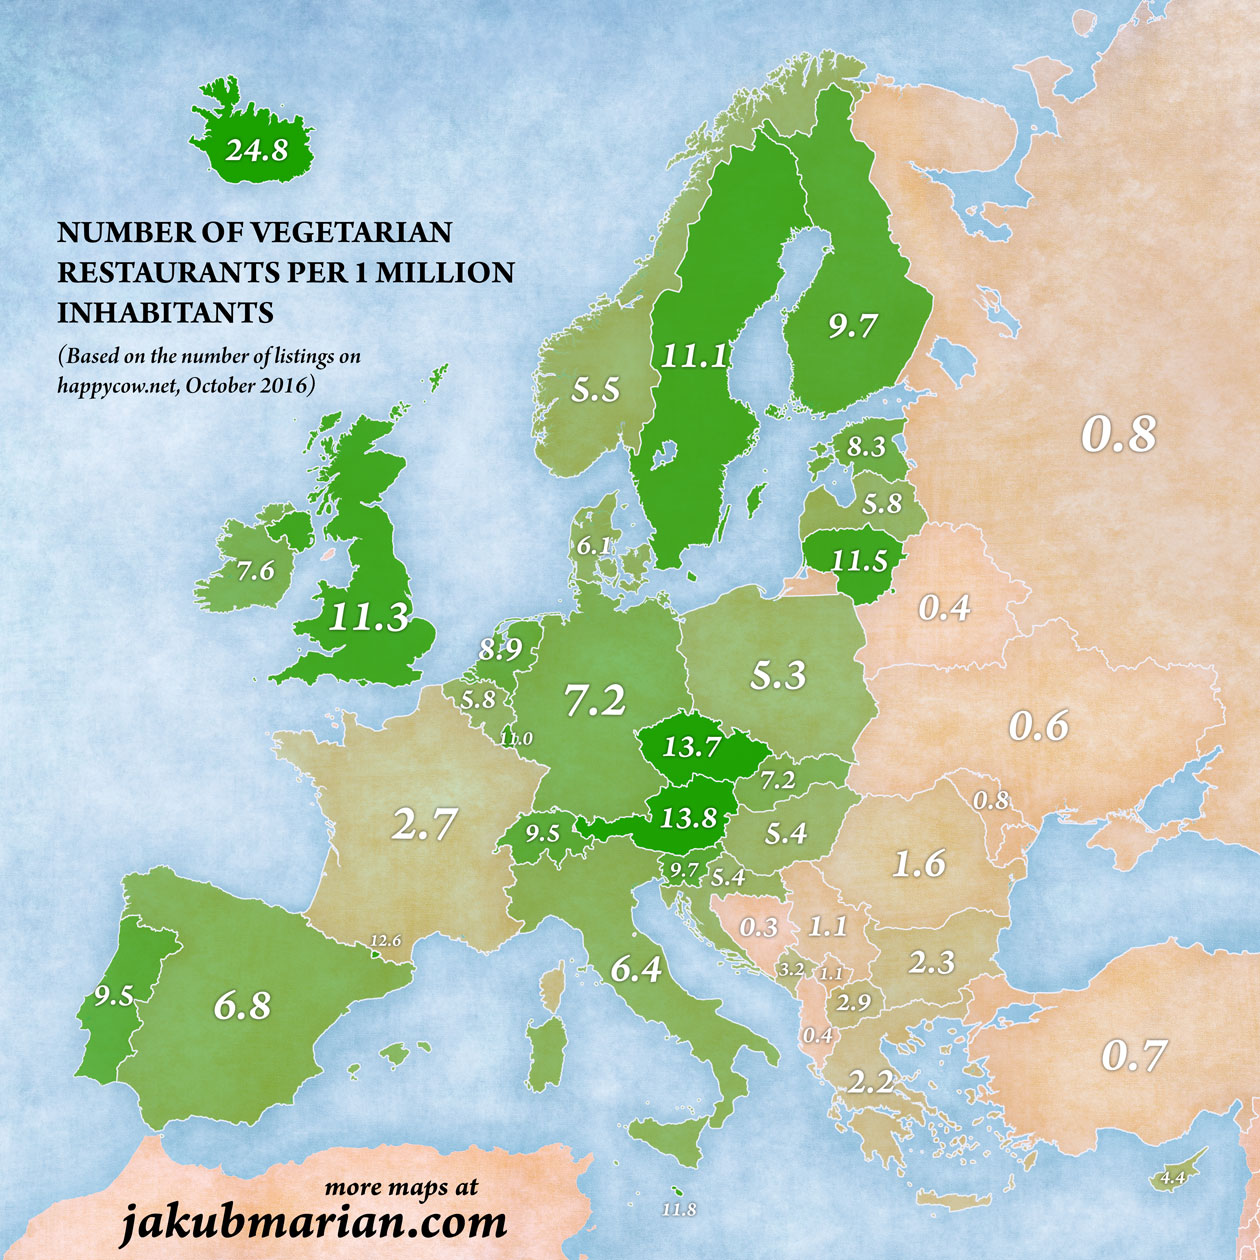 Number of vegetarian restaurants per 1 million inhabitants